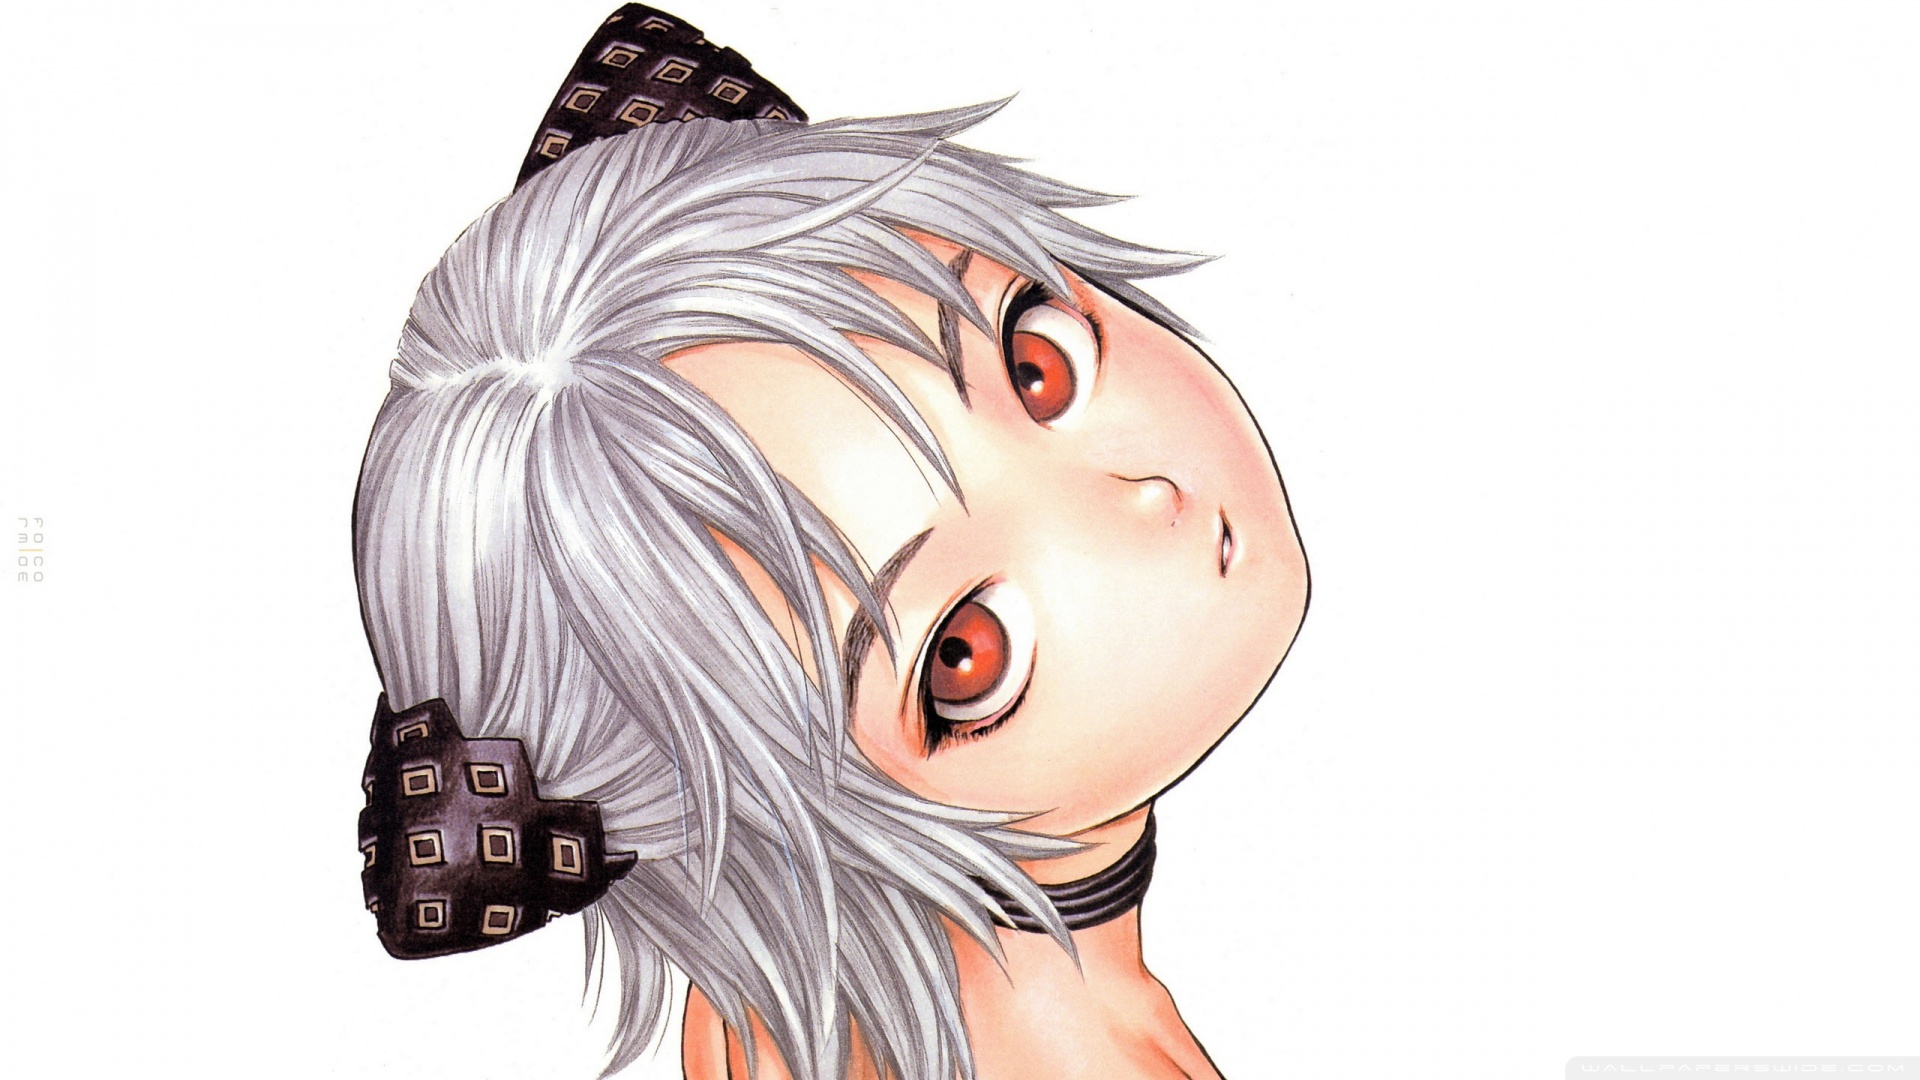 Anime Anime Girls Artwork Digital Art Silver Hair Short Hair Bangs Red Eyes Choker Looking At Viewer 1920x1080